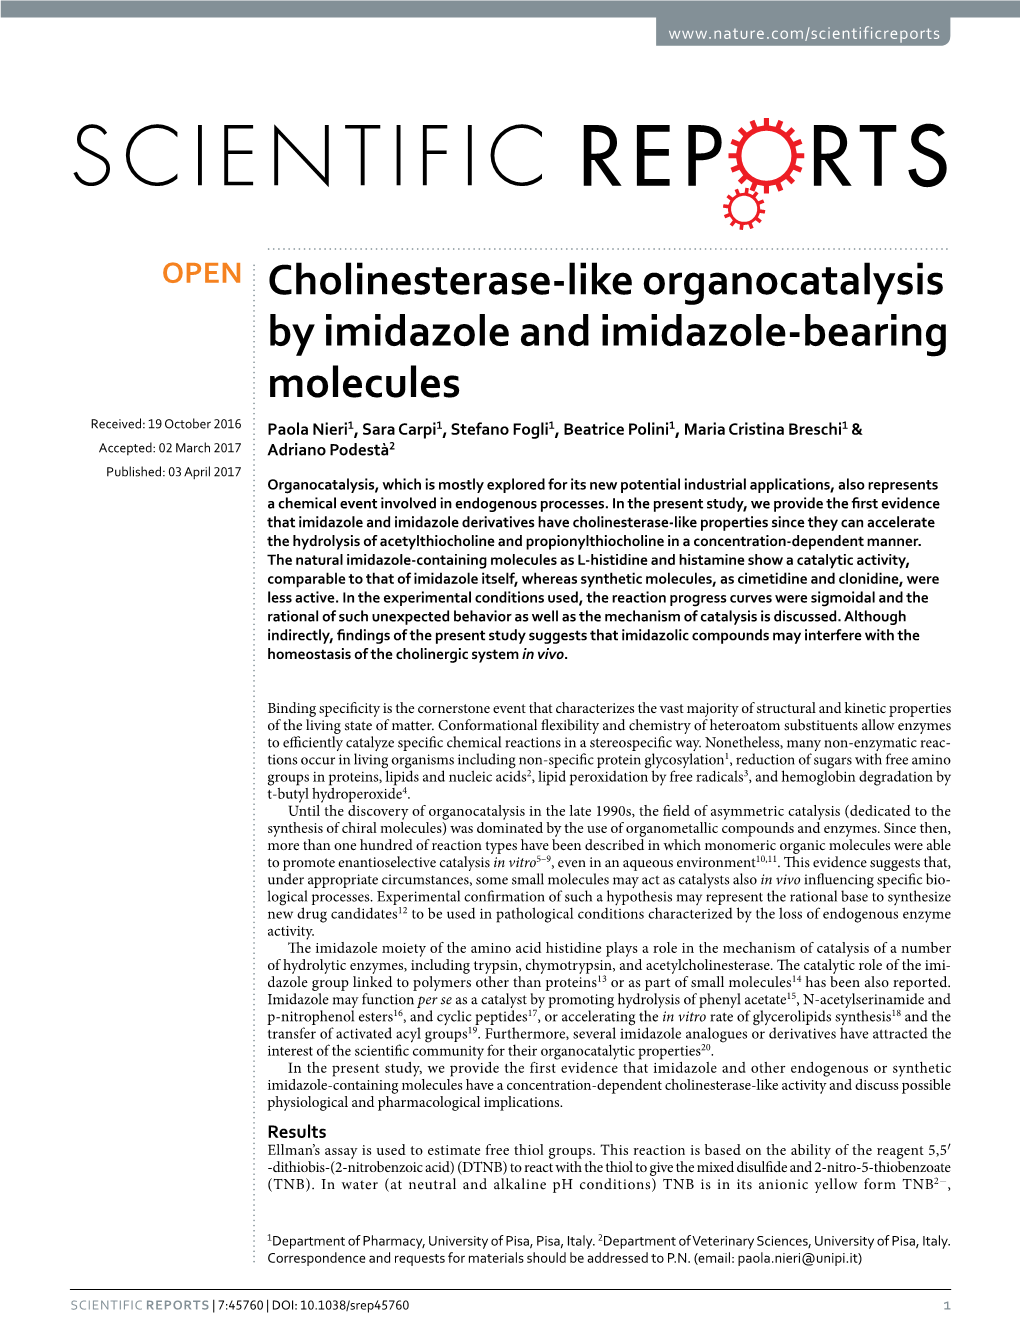 Cholinesterase-Like Organocatalysis by Imidazole and Imidazole-Bearing Molecules